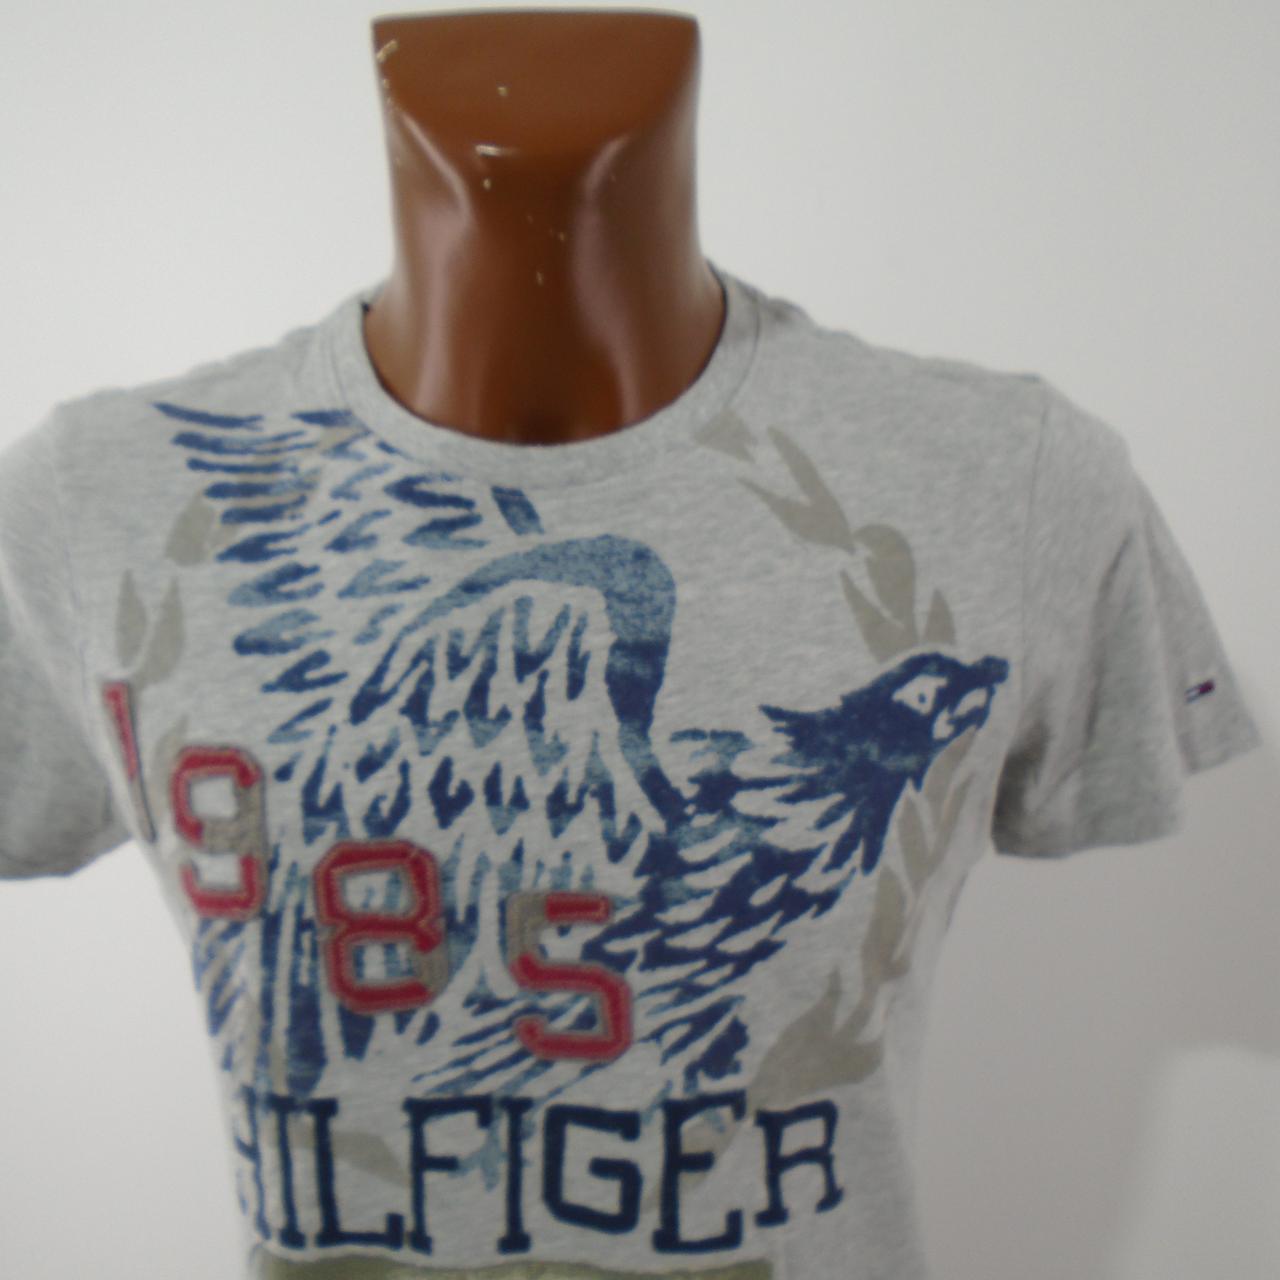 Camiseta Hombre Tommy Hilfiger. Gris. M. Usado. Muy bien